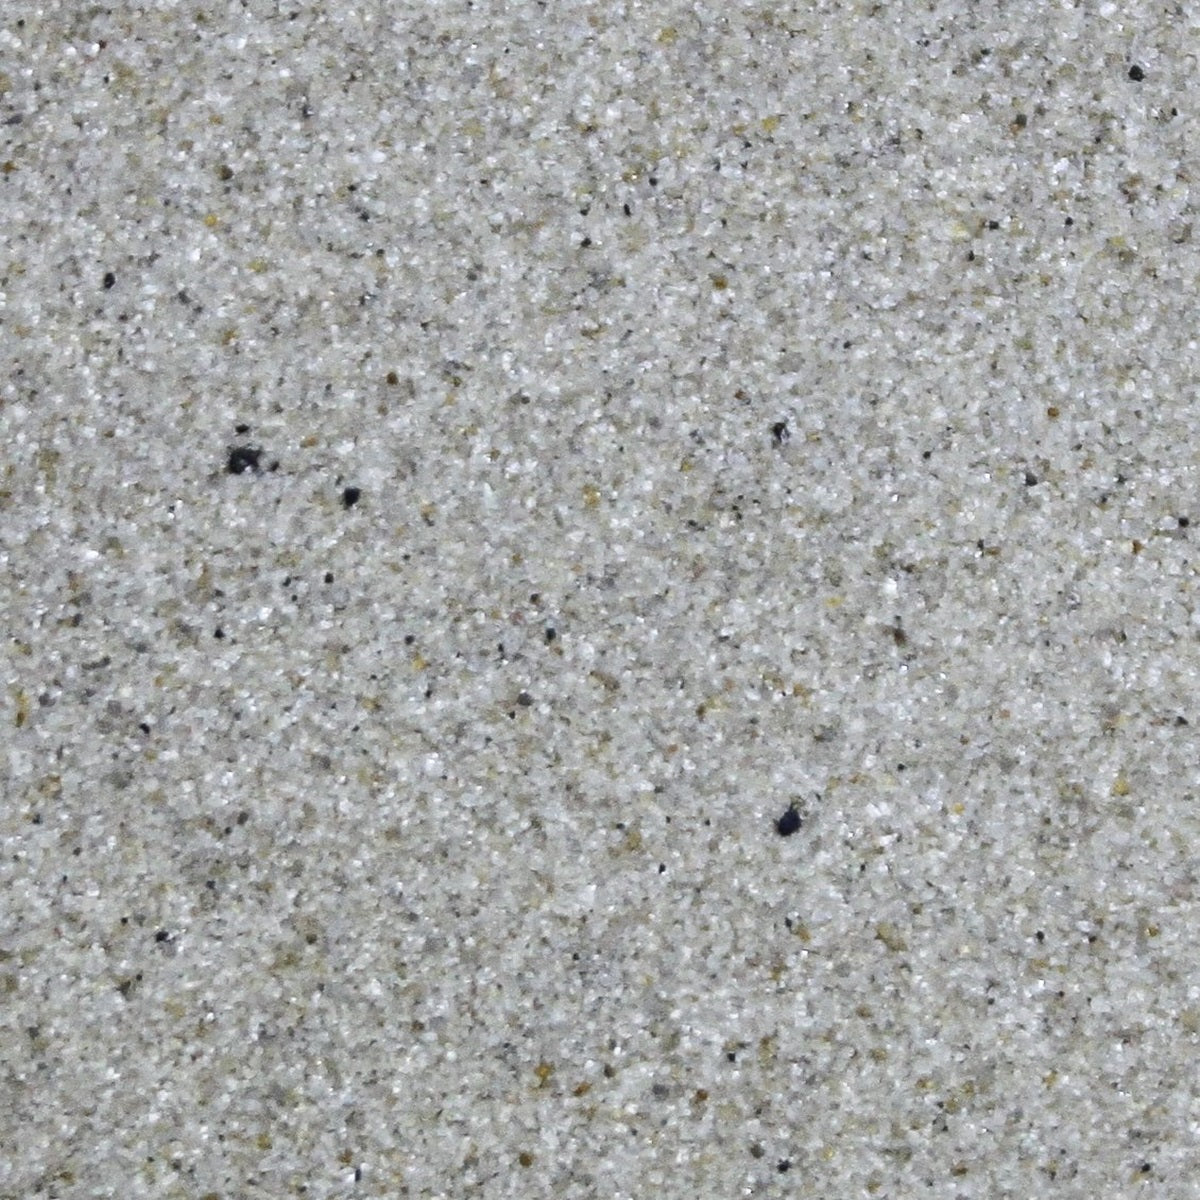 Pettex - Calci Sand Reptile Substrate (10L)